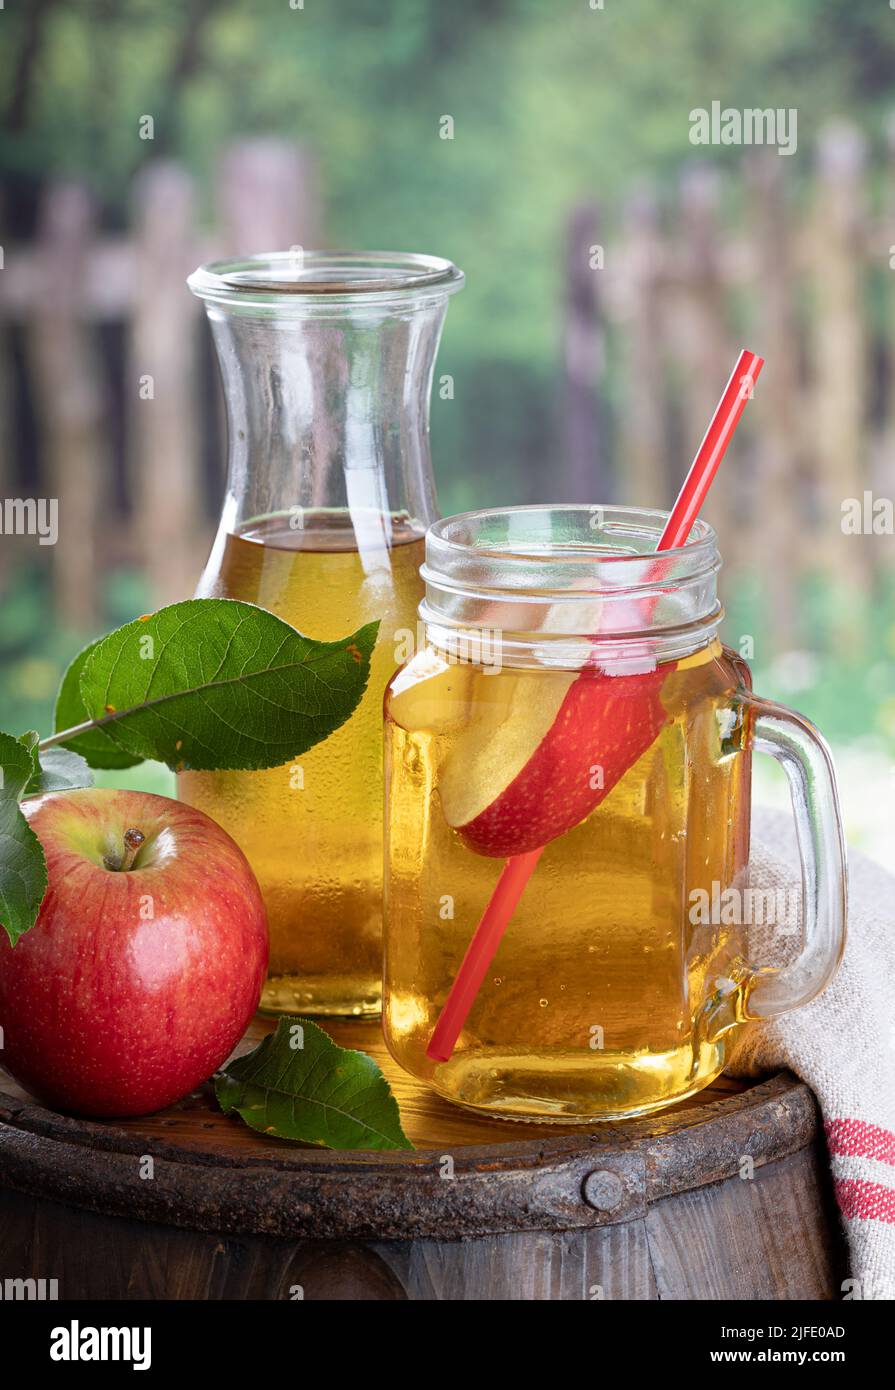 Vaso de zumo de manzana con rodaja de manzana sobre un viejo barril de madera con fondo rural Foto de stock